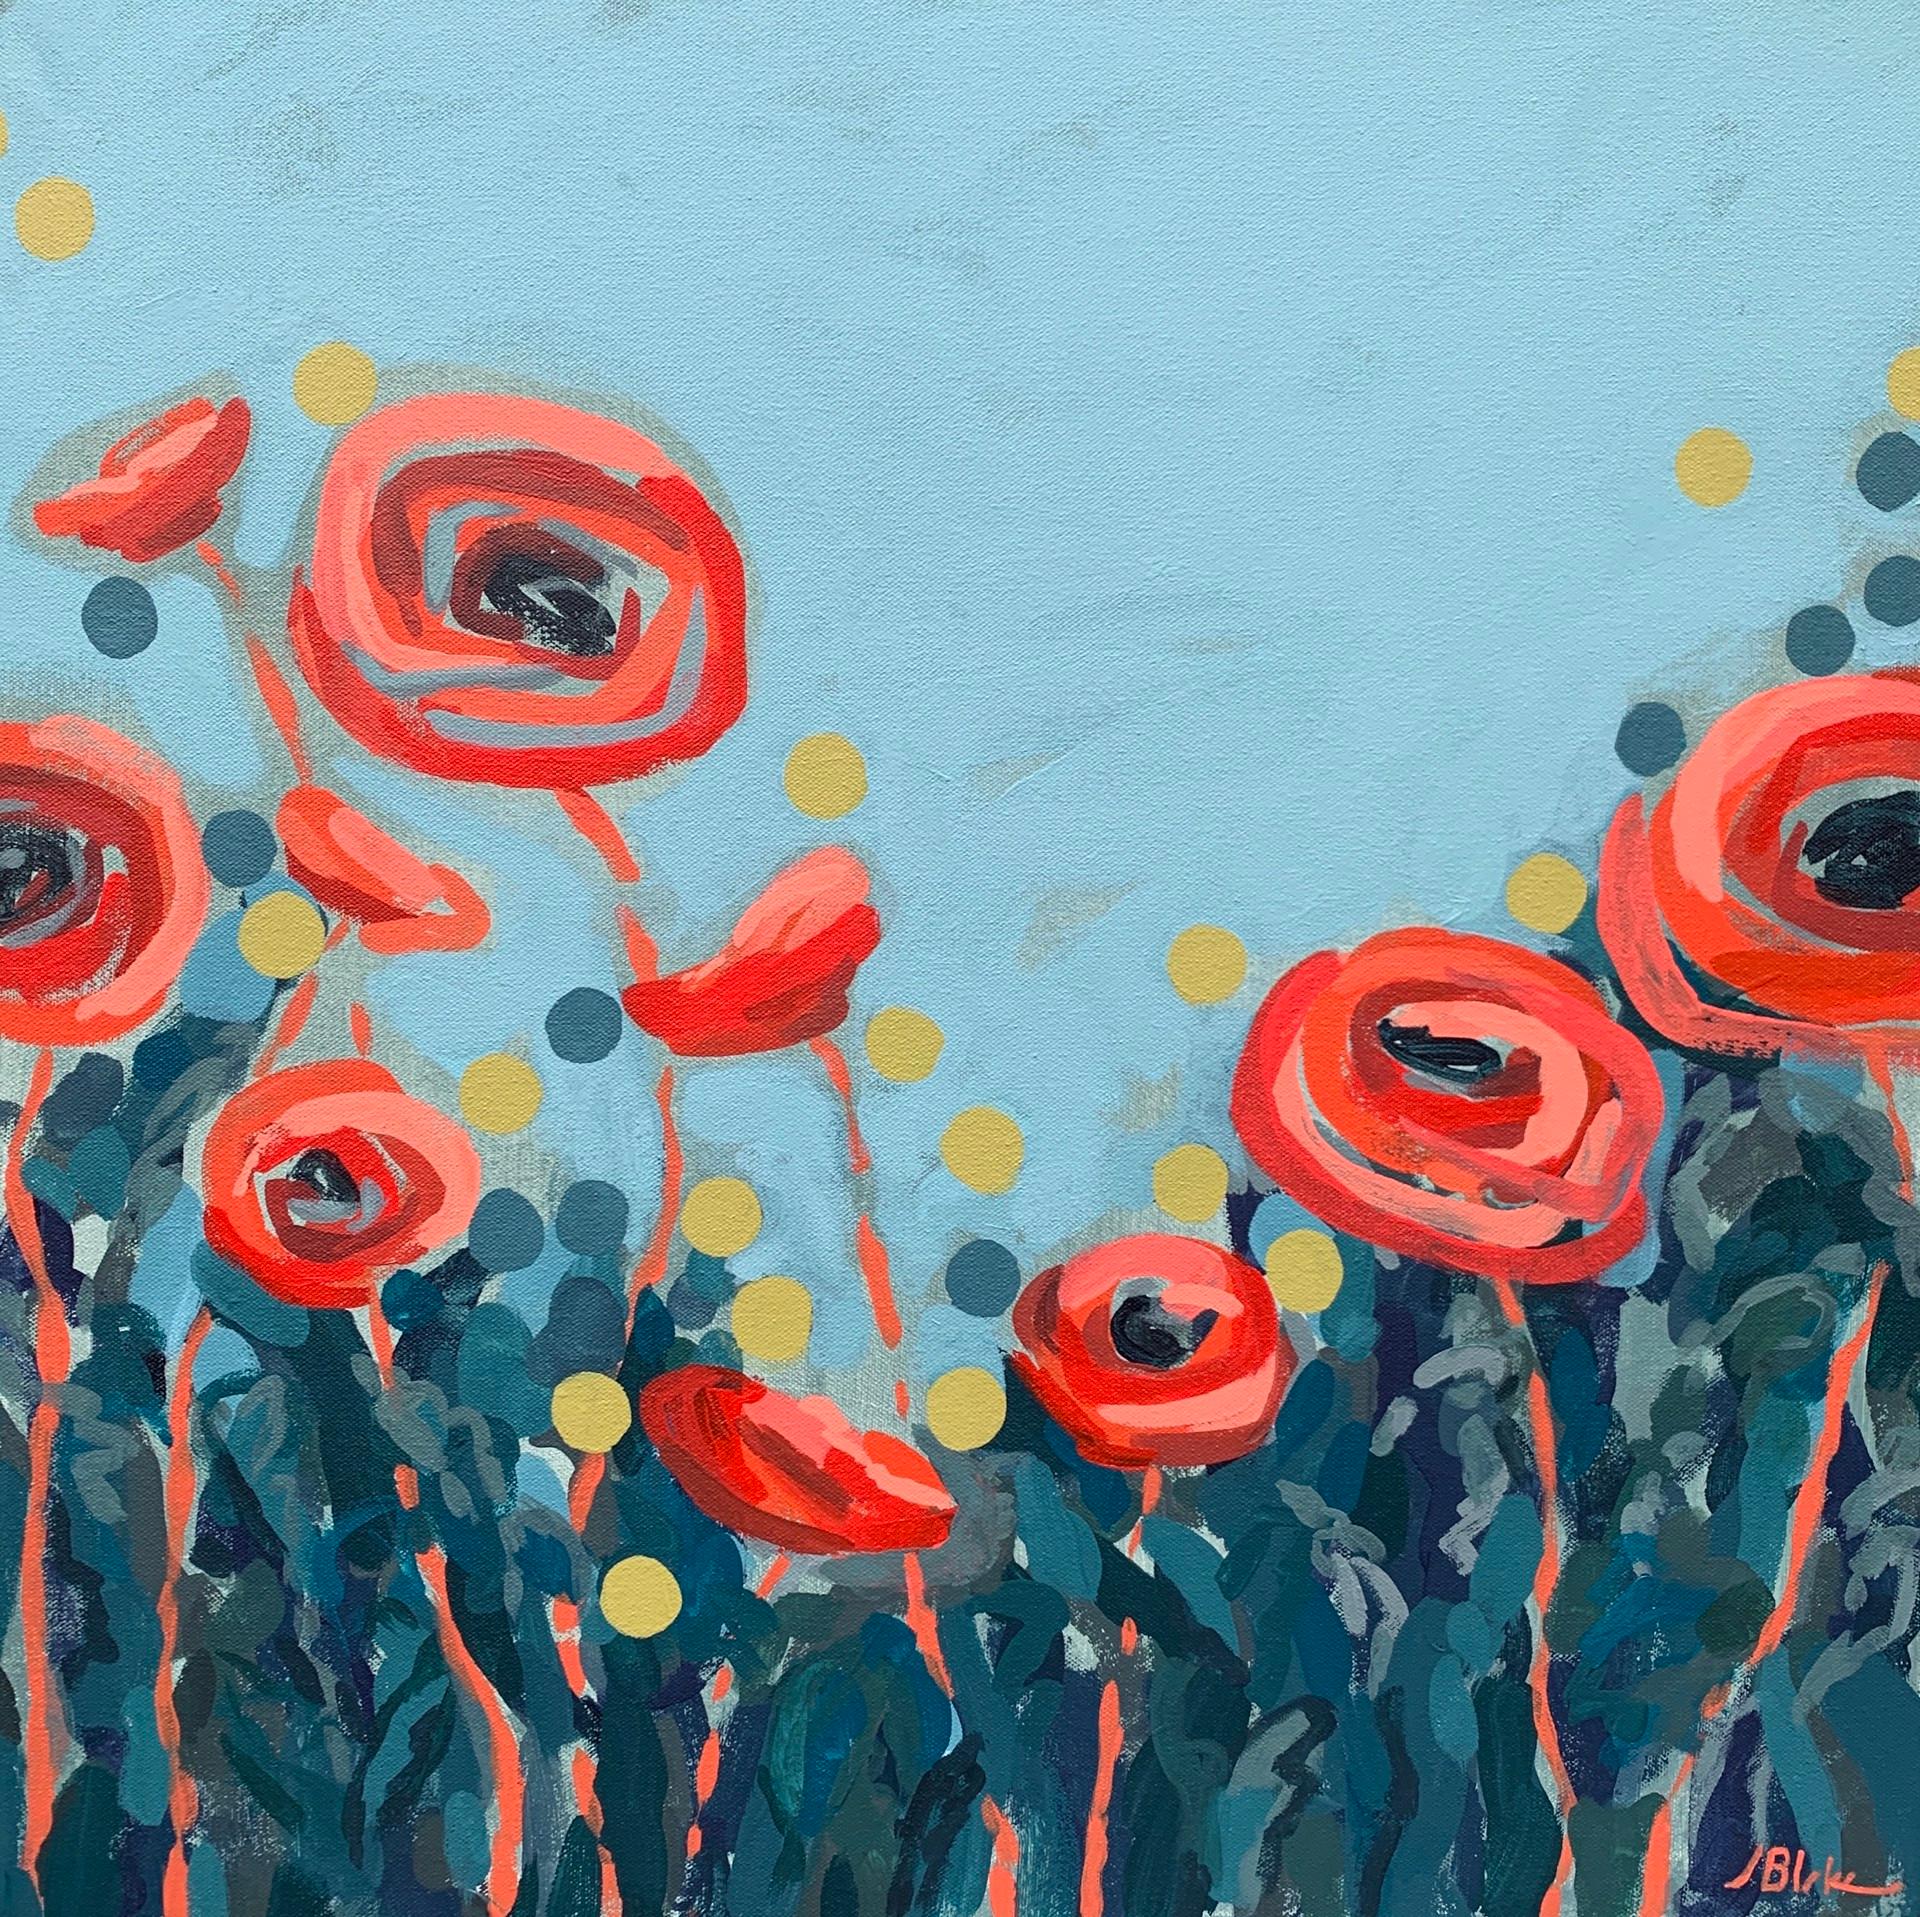 Red Poppies + Dots - Art by Julia Blake